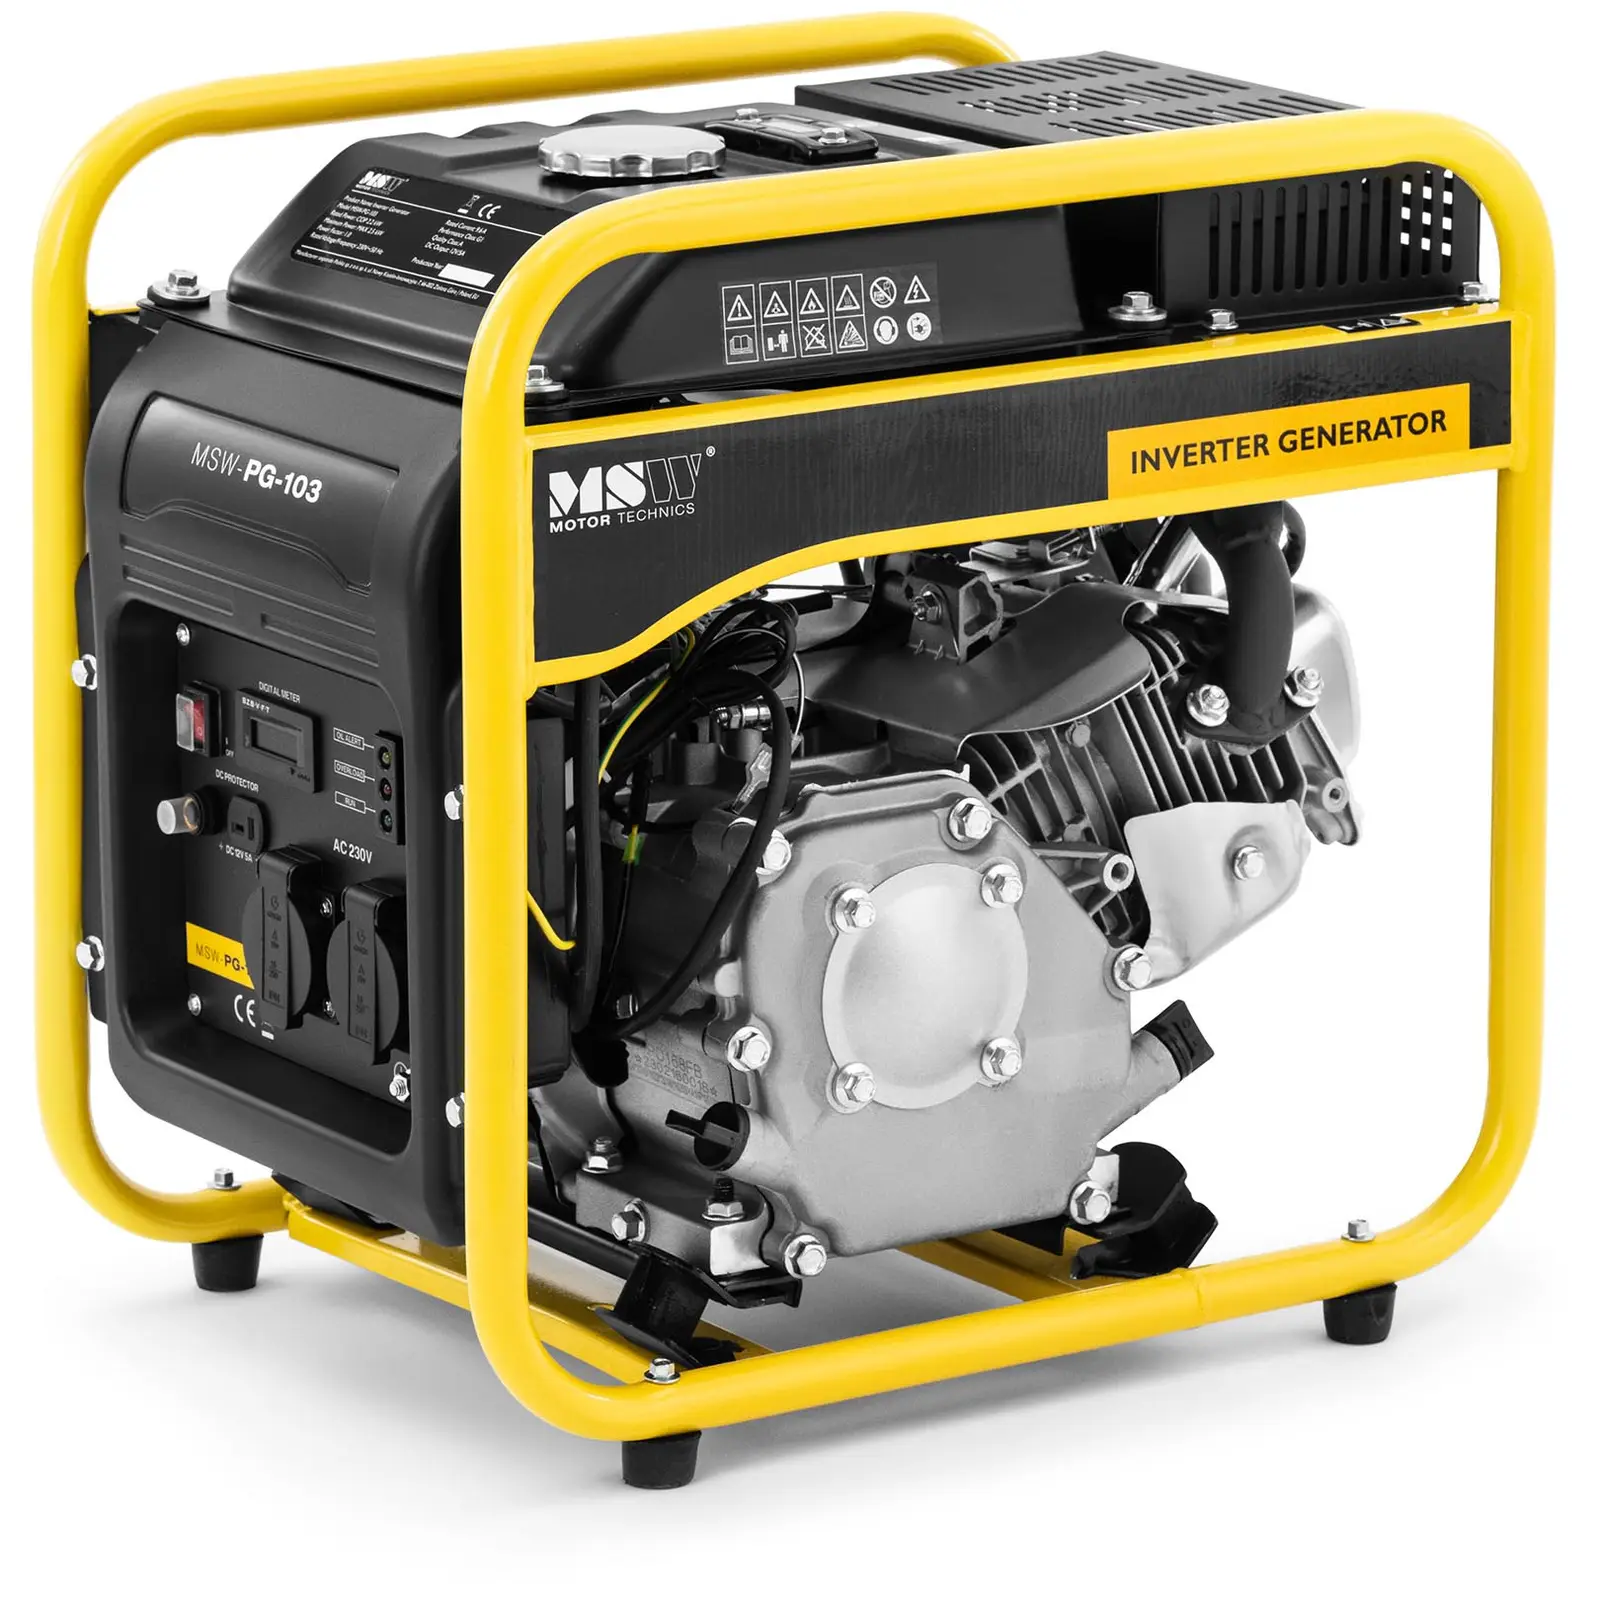 Inverter generator benzin - 2500 W - 230 V AC - startsnor